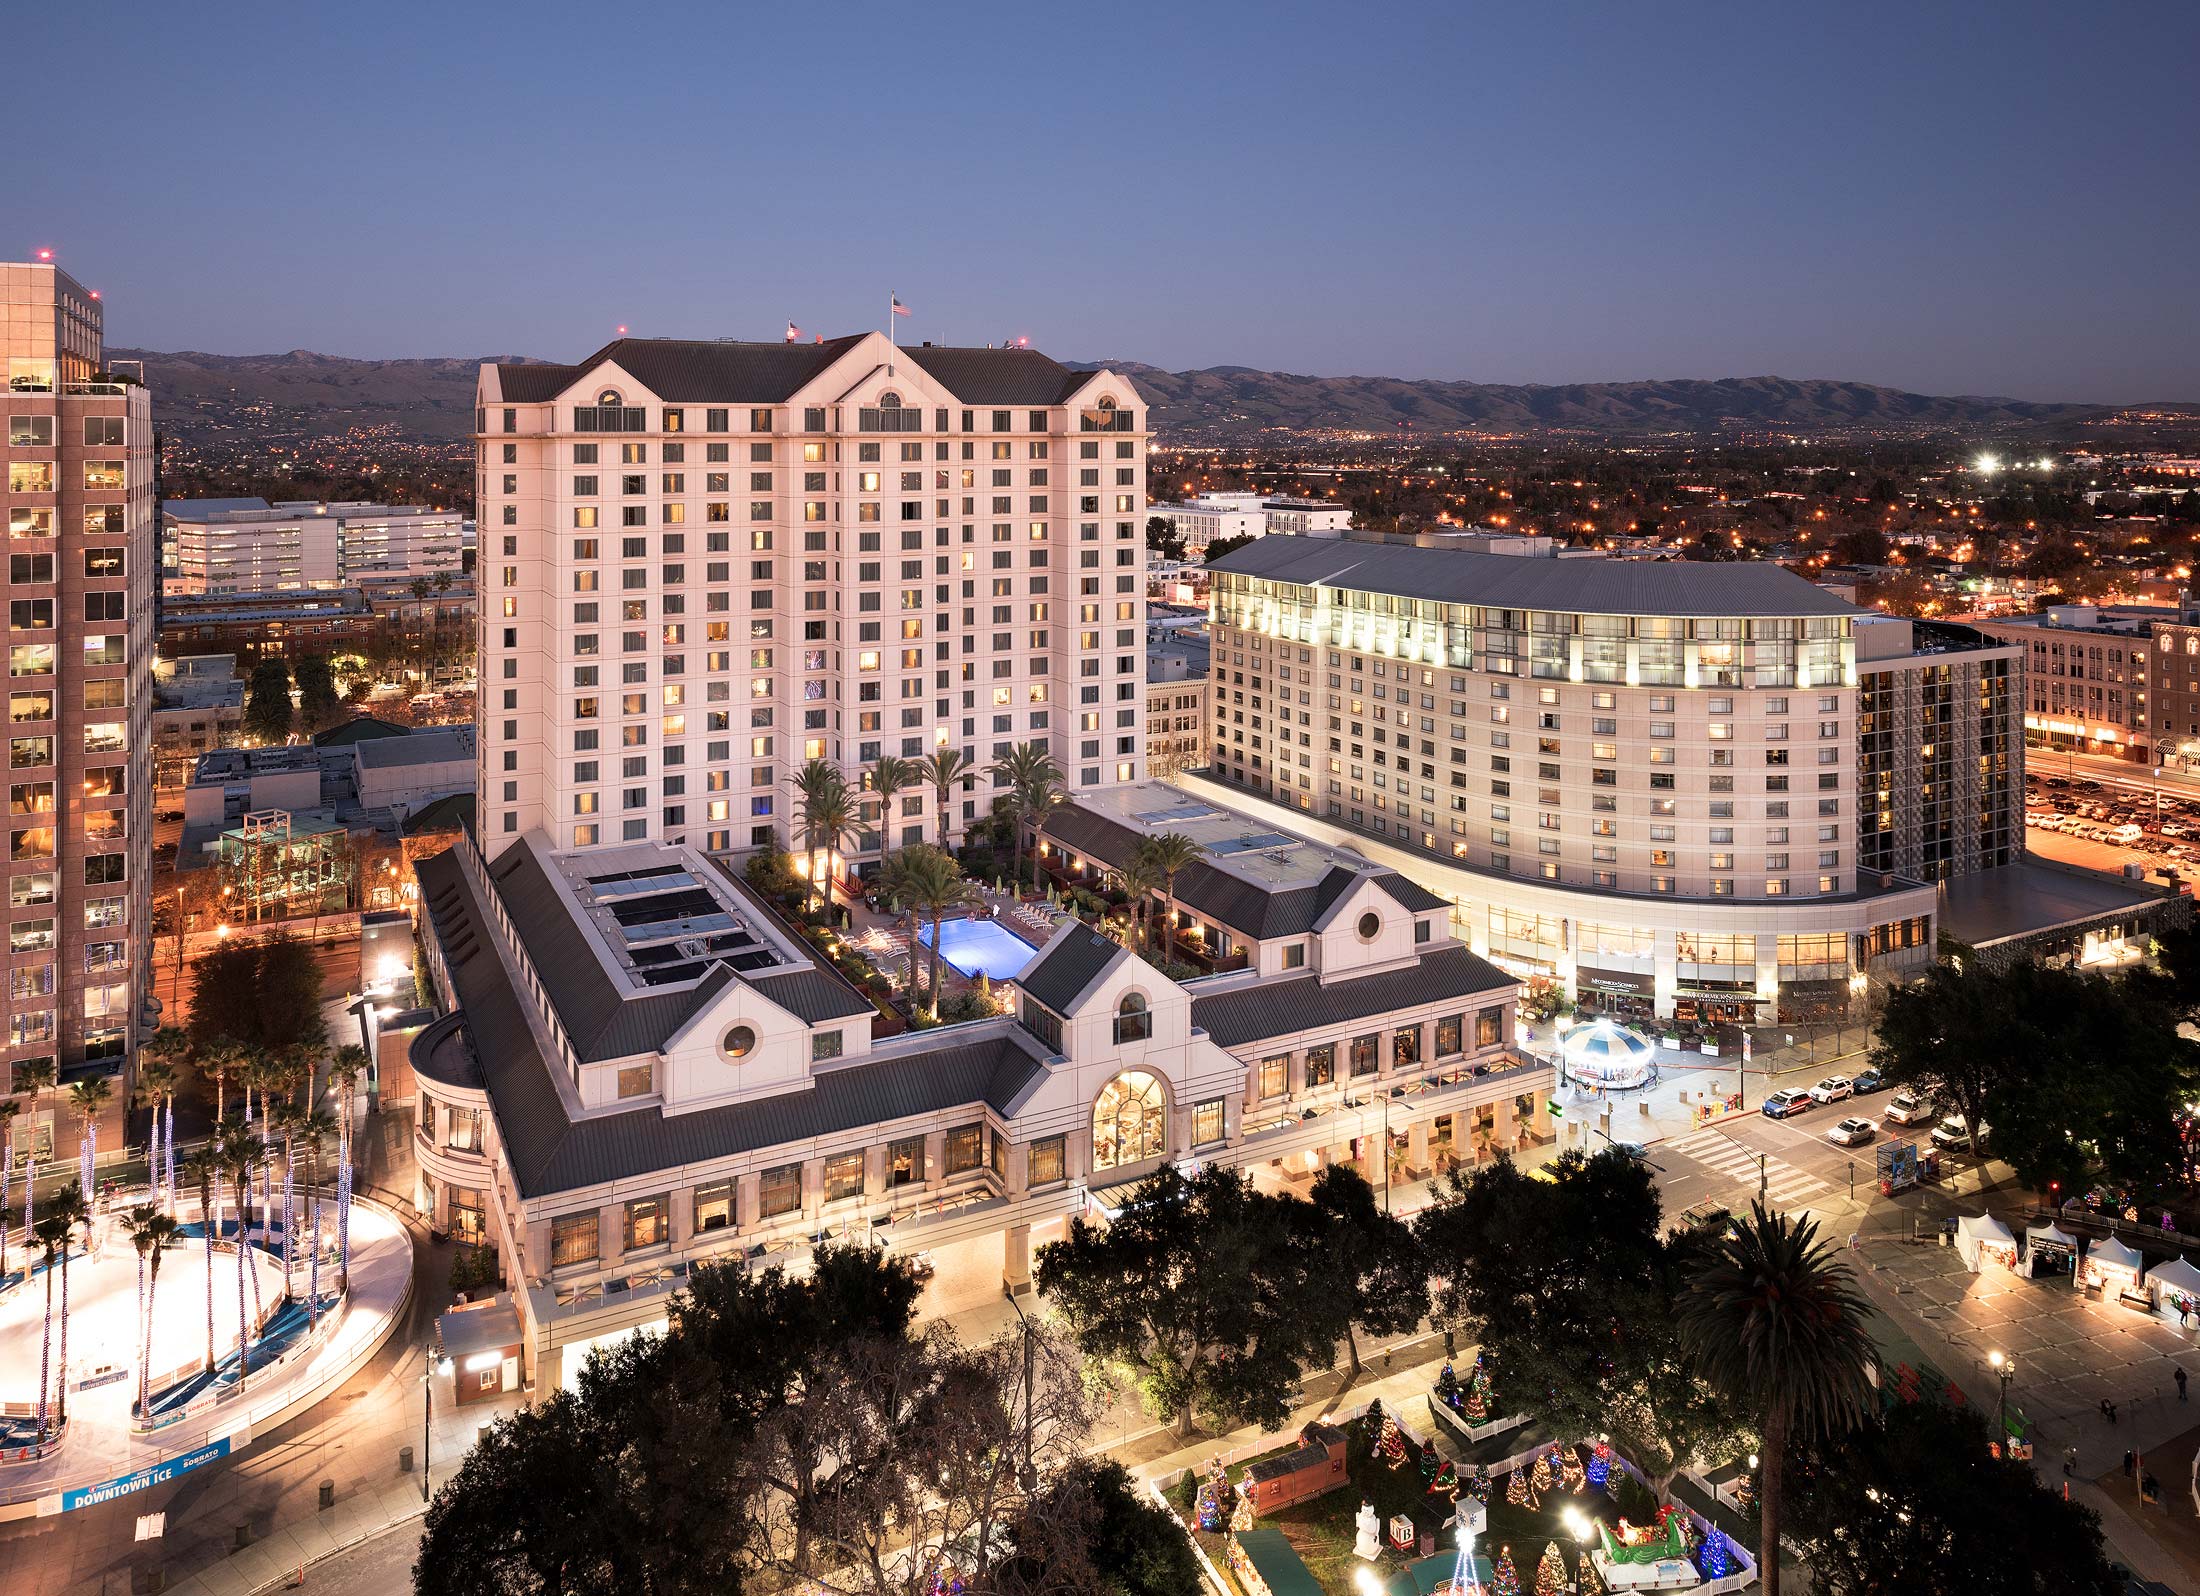 Fairmont Hotel in San Jose California